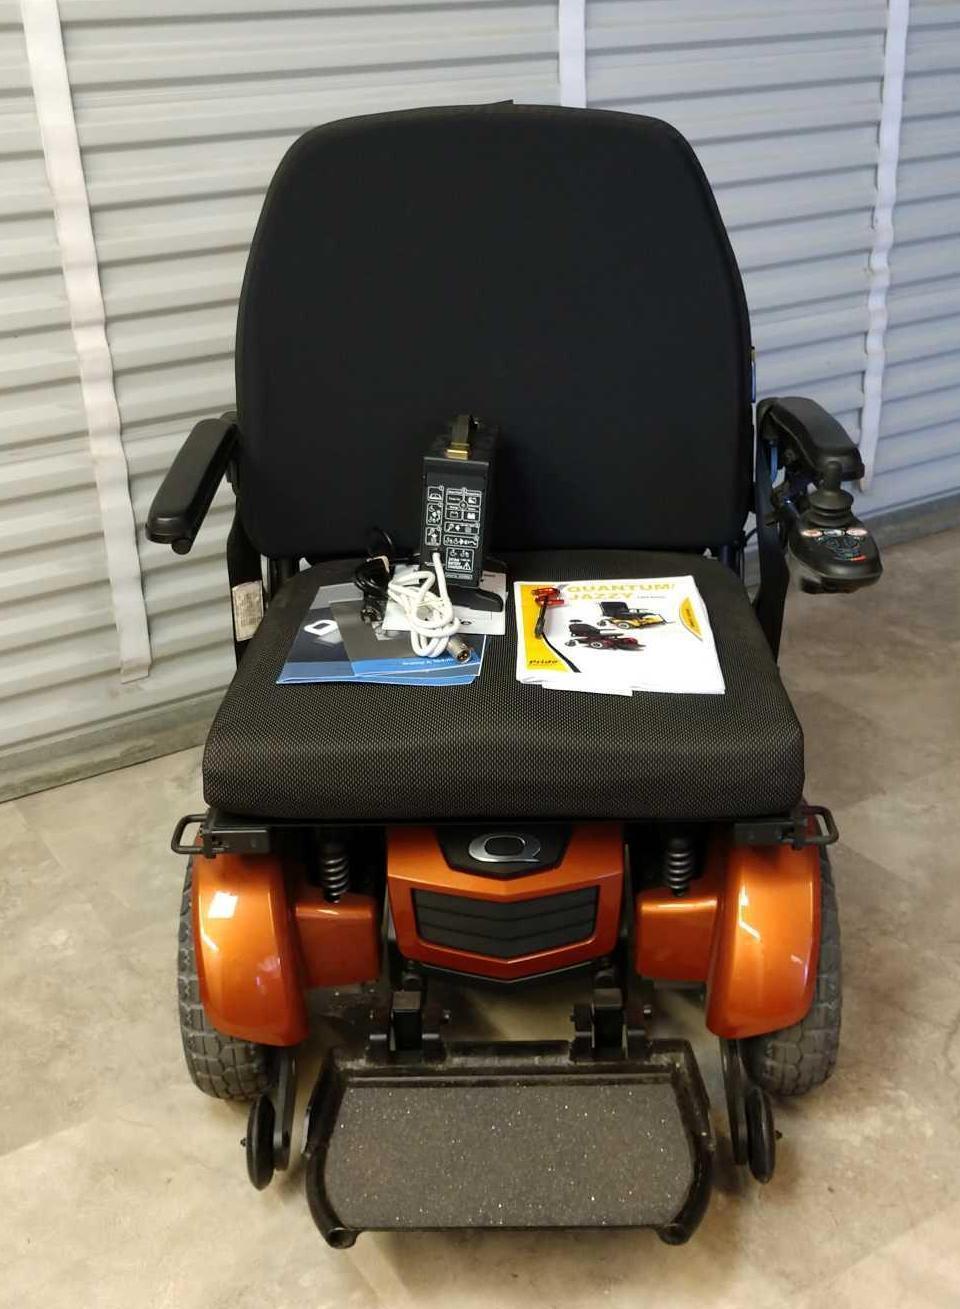 Quantum Jazzy 1450 series electric wheelchair